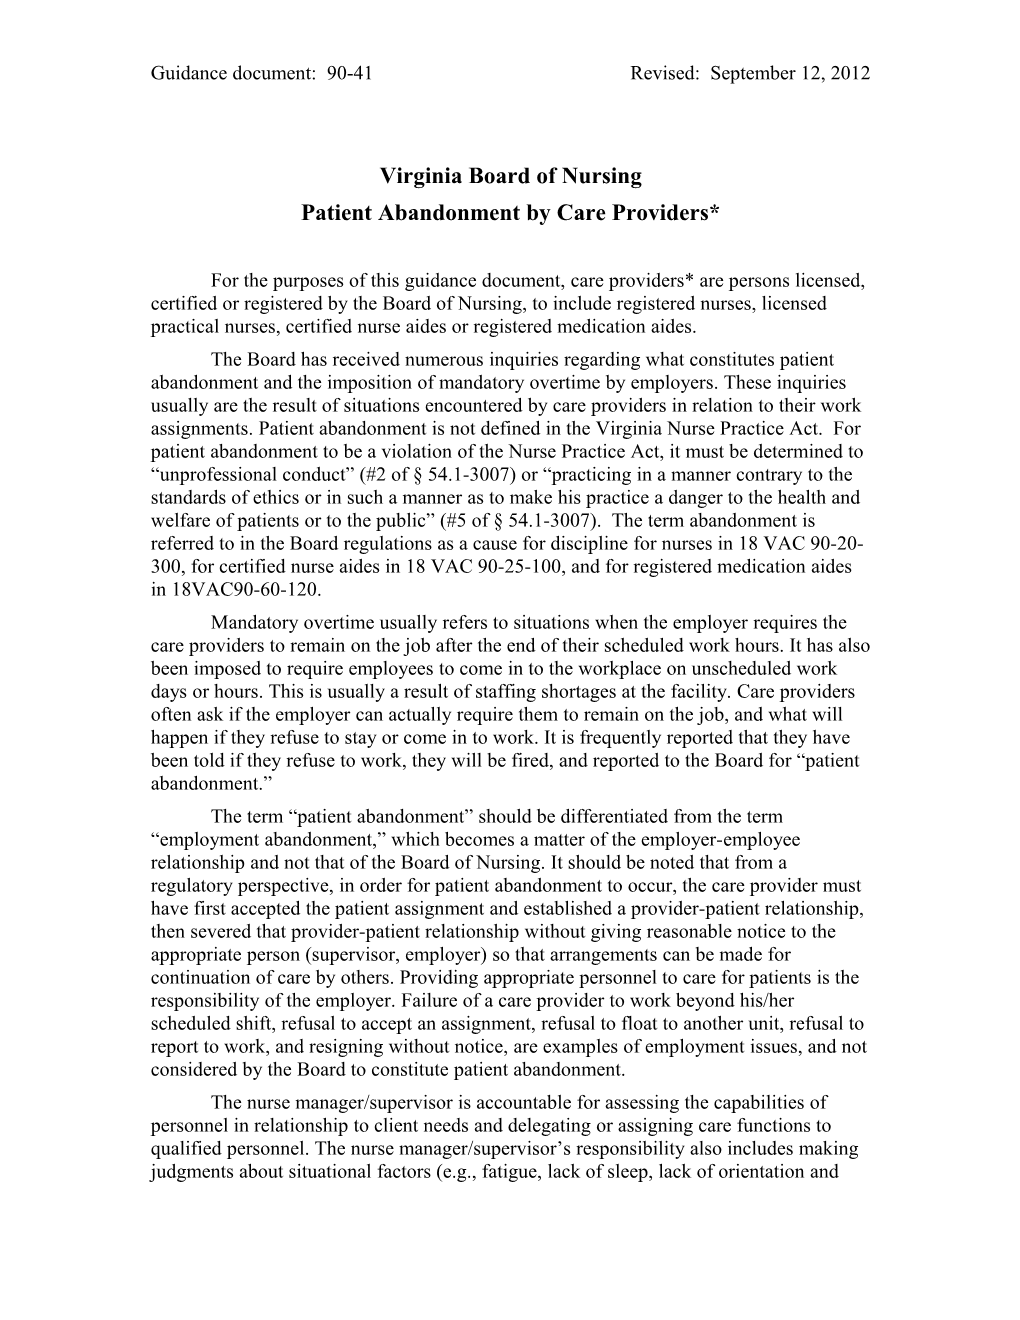 Virginia Board of Nursing